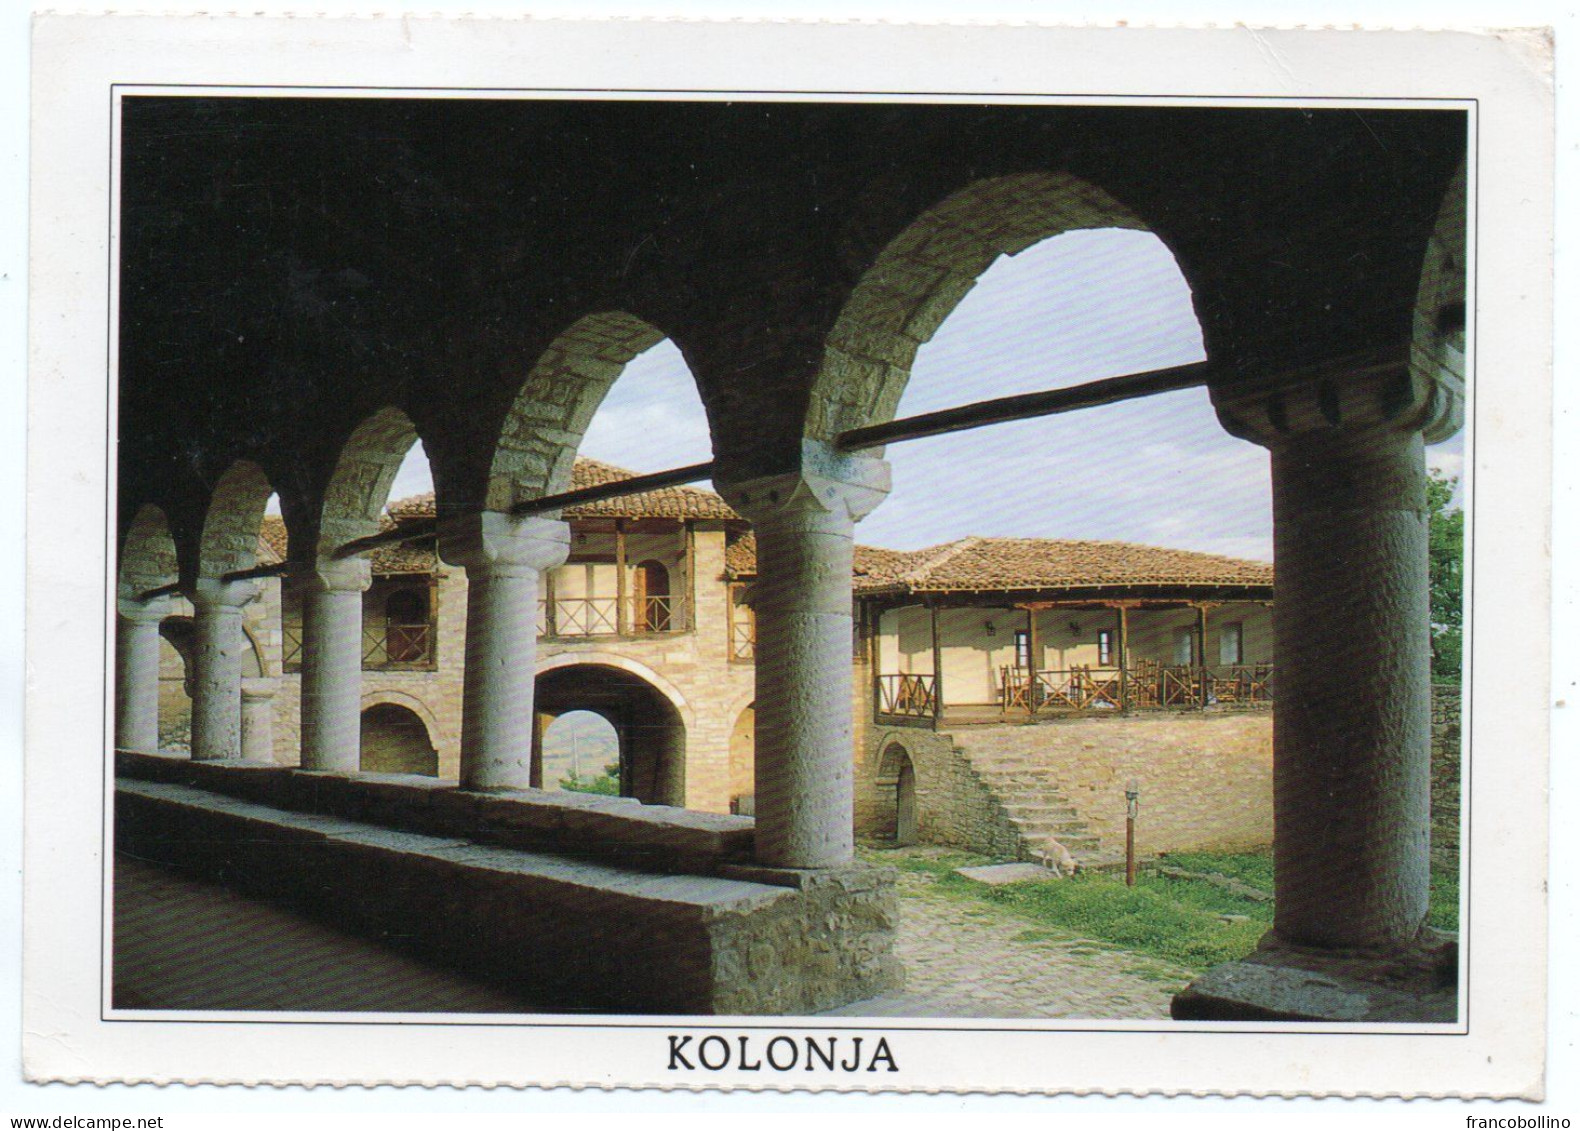 ALBANIA/SHQIPERIA - KOLONJA/KOLONJE - ARDENIZA'S MONASTERY / THEMATIC STAMP-COSTUMES / KORCE CANCEL 2001 - Albanie